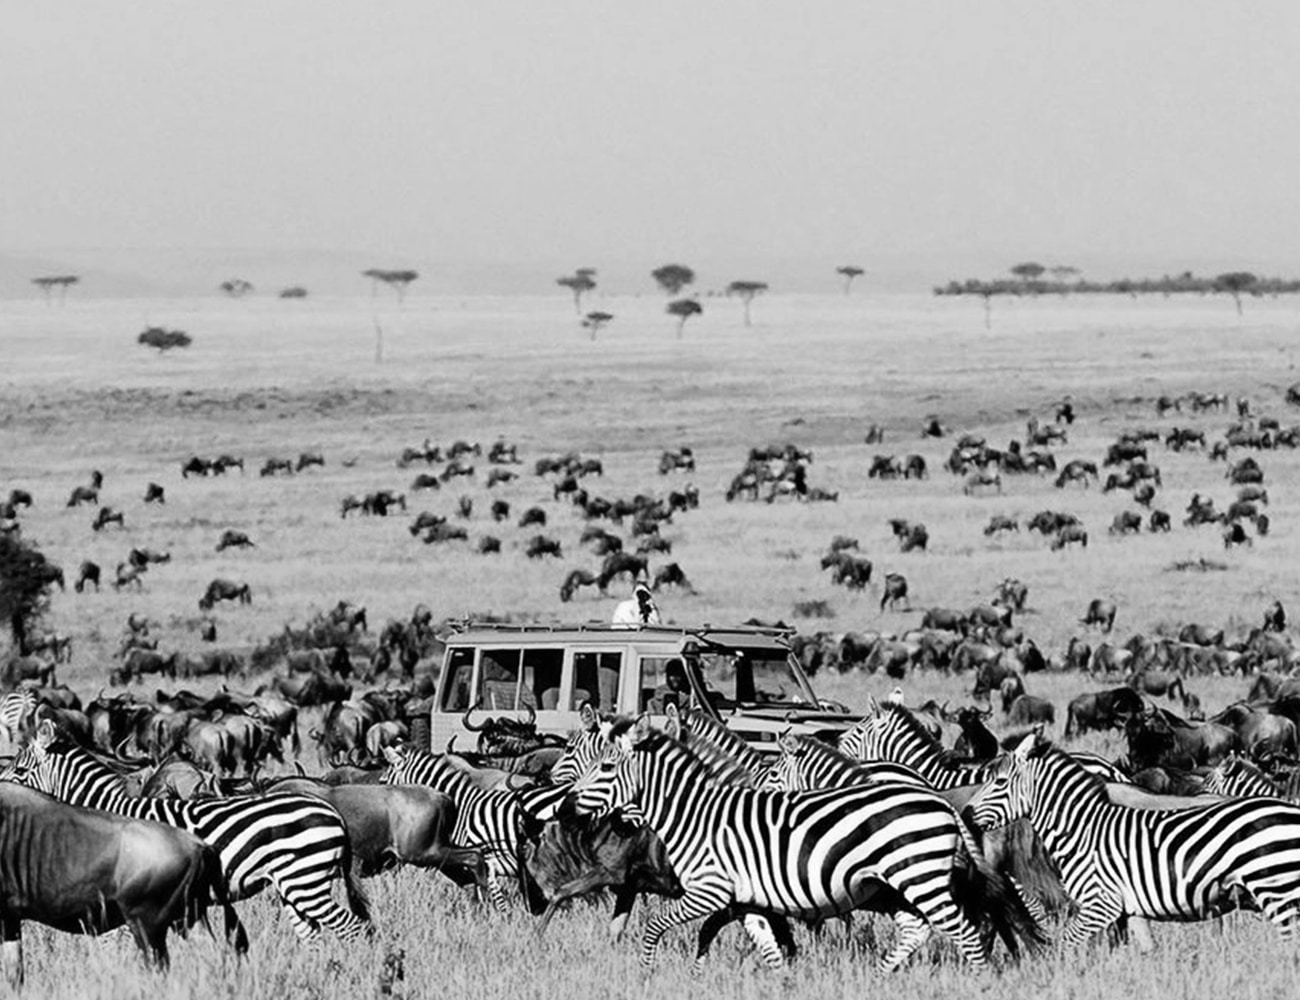 Wildlife at Tanzania Serengeti National Park